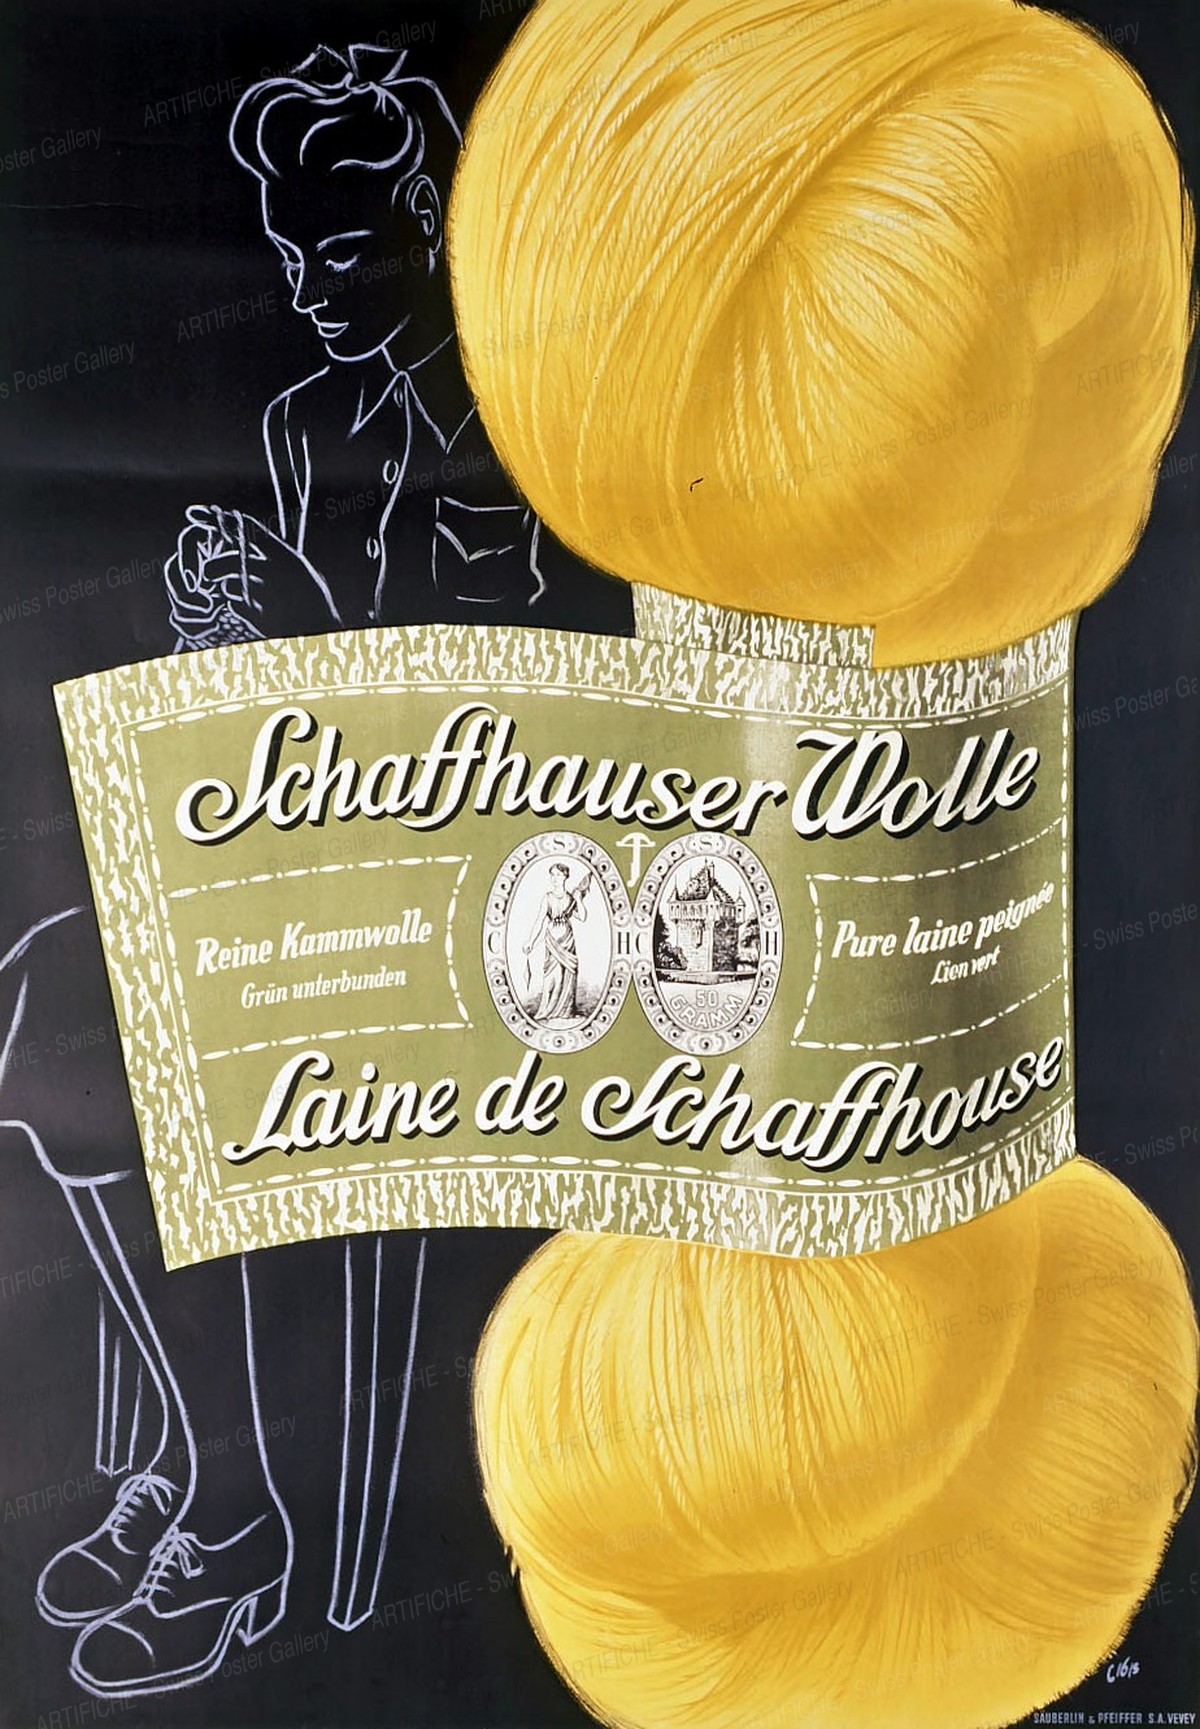 Schaffhauser Wolle – Laine de Schaffhouse, Herbert Berthold Libiszewski